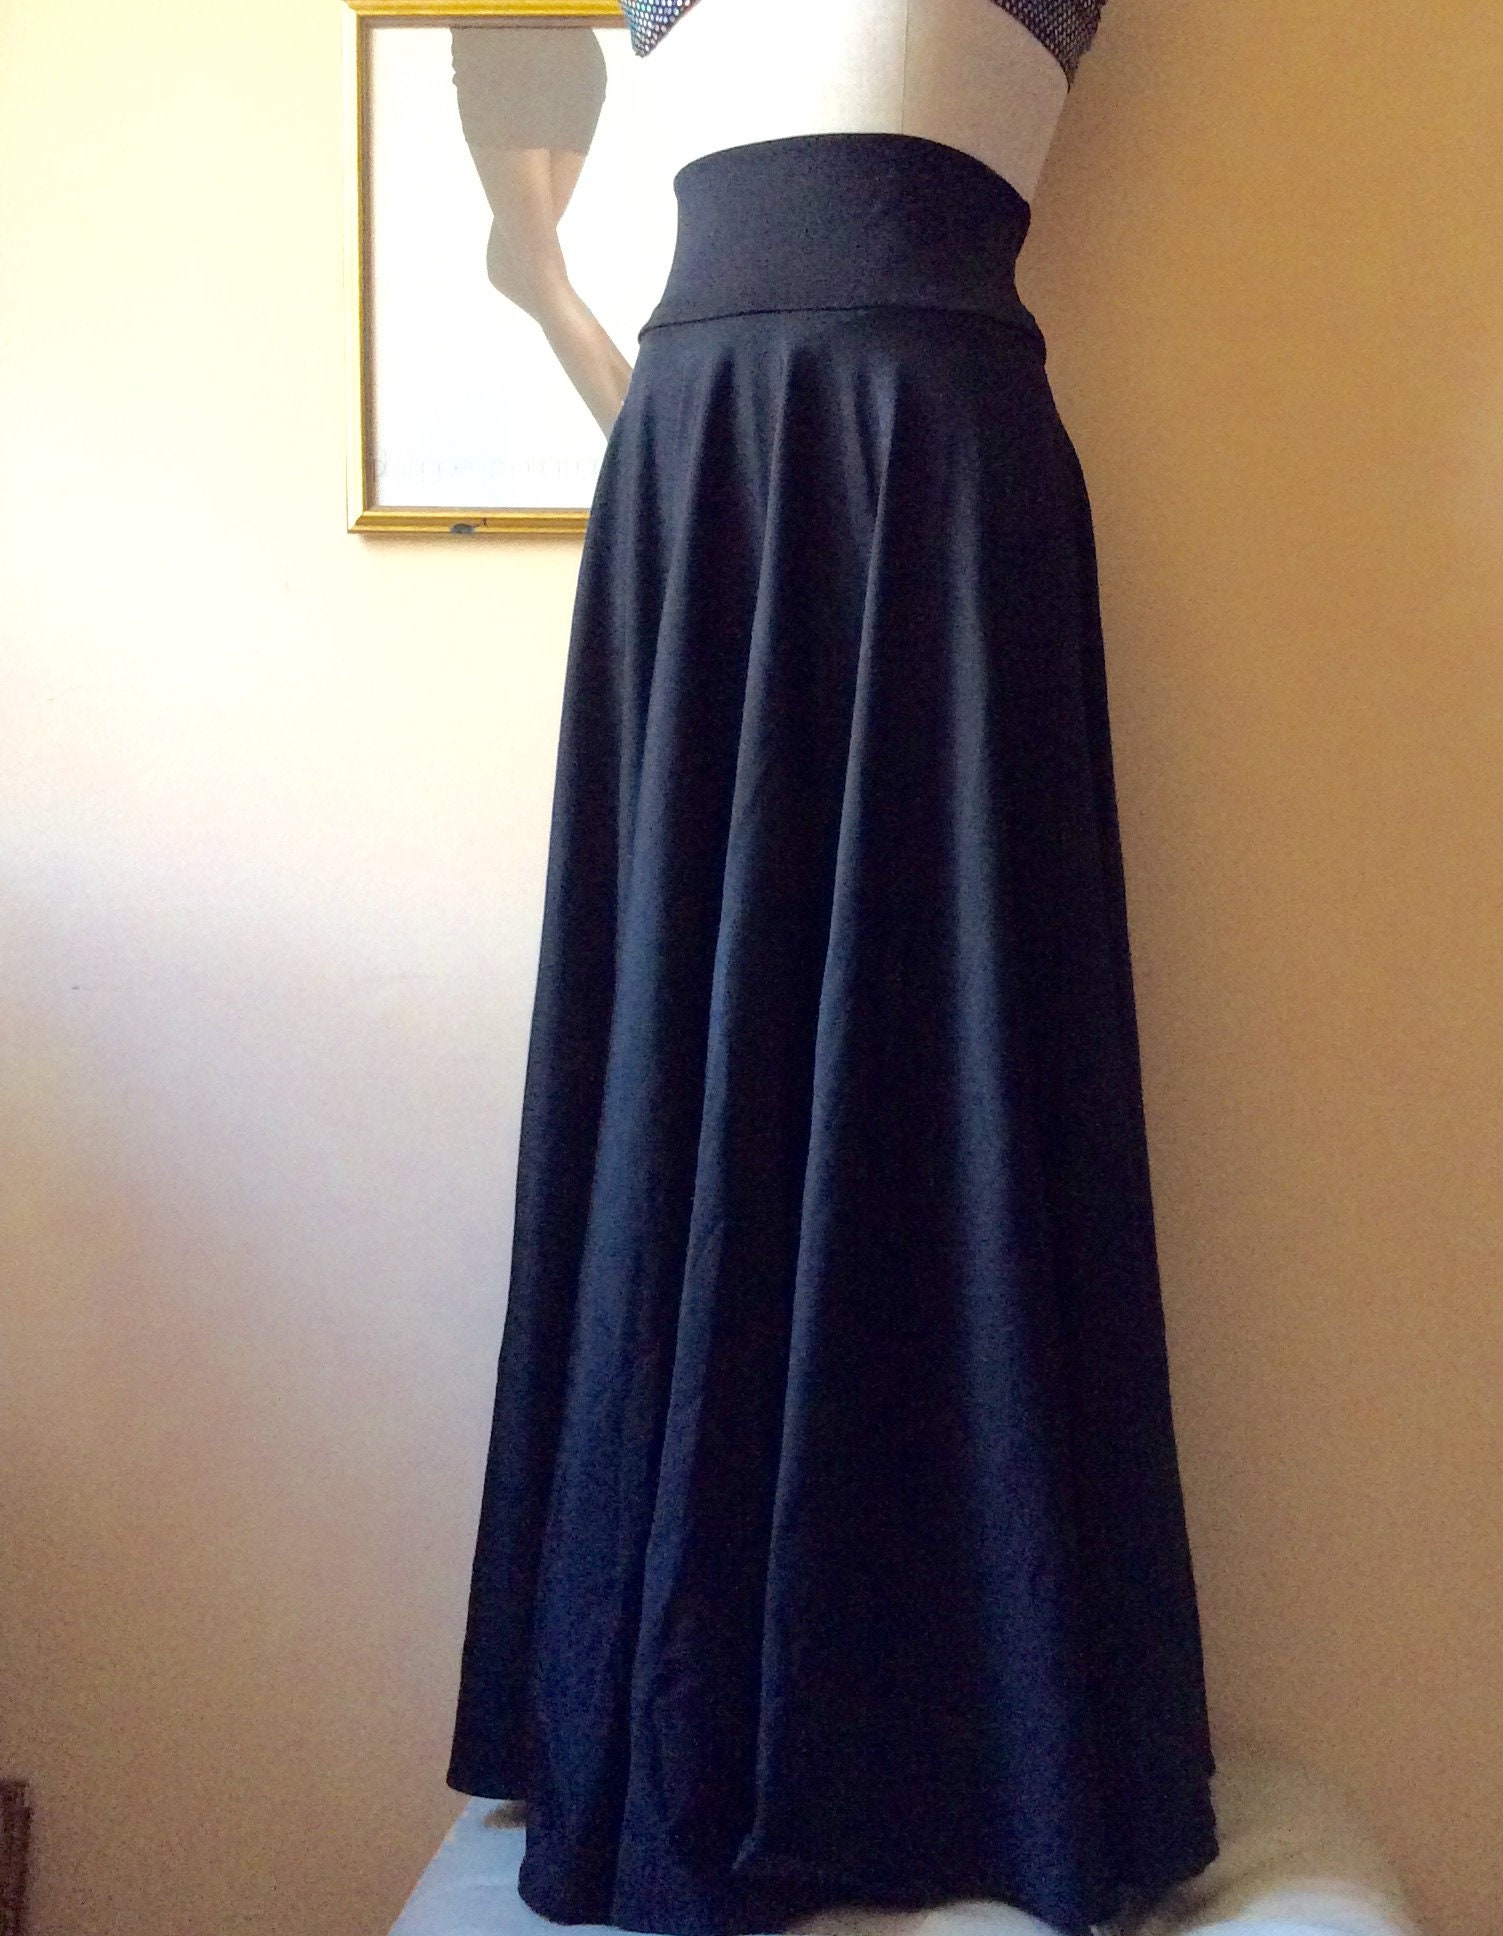 Long Black Satin Skirt, Full Circle Skort With High Waist and Short ...